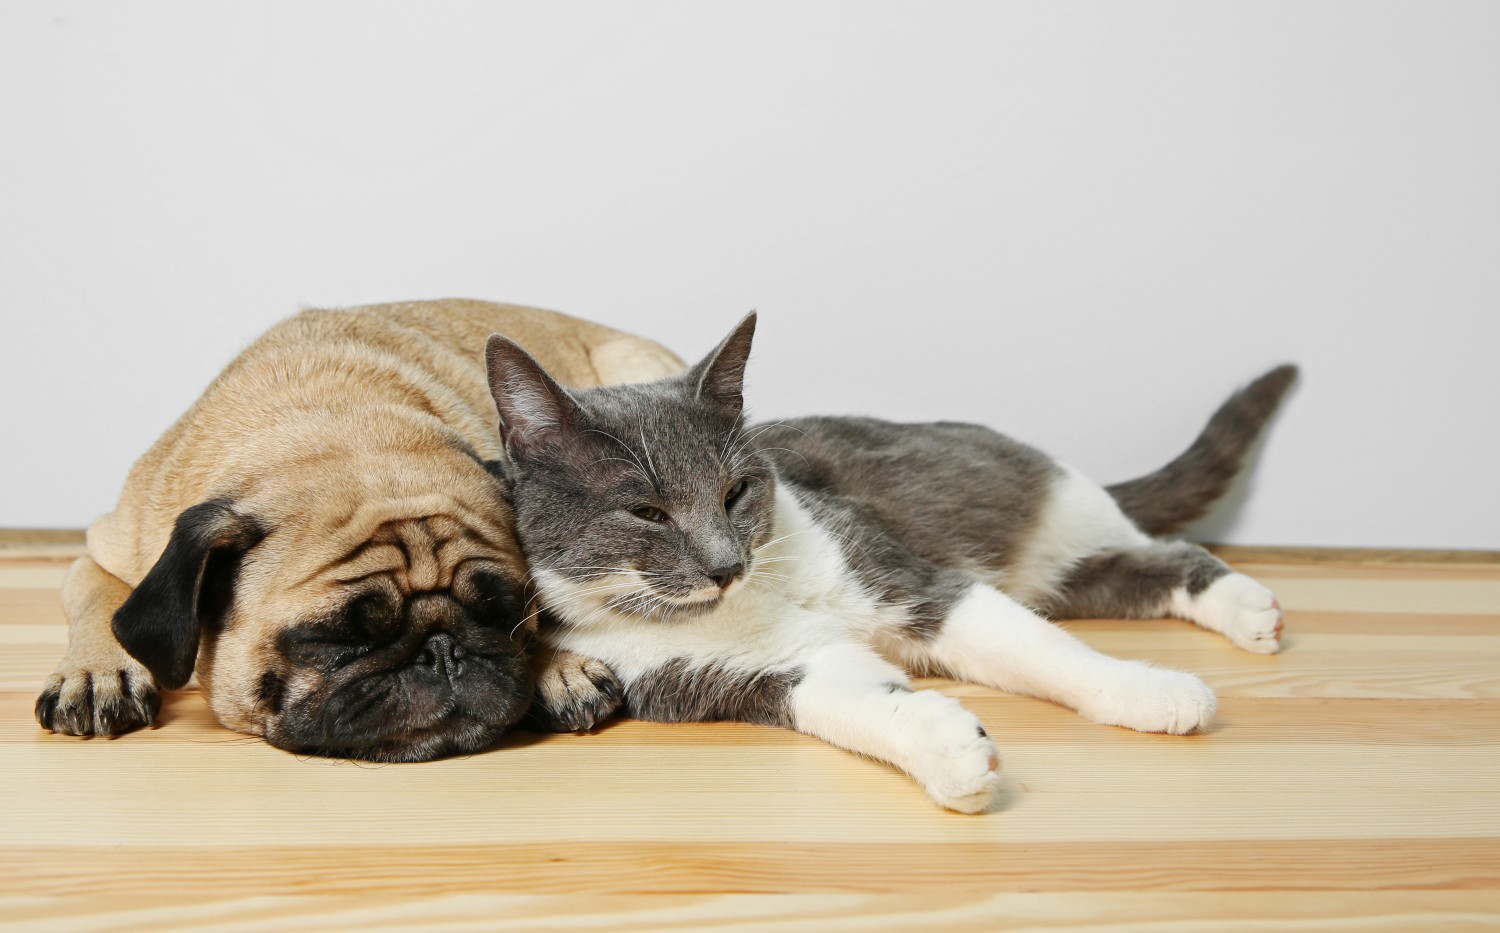 Dog and Cat Sleeping